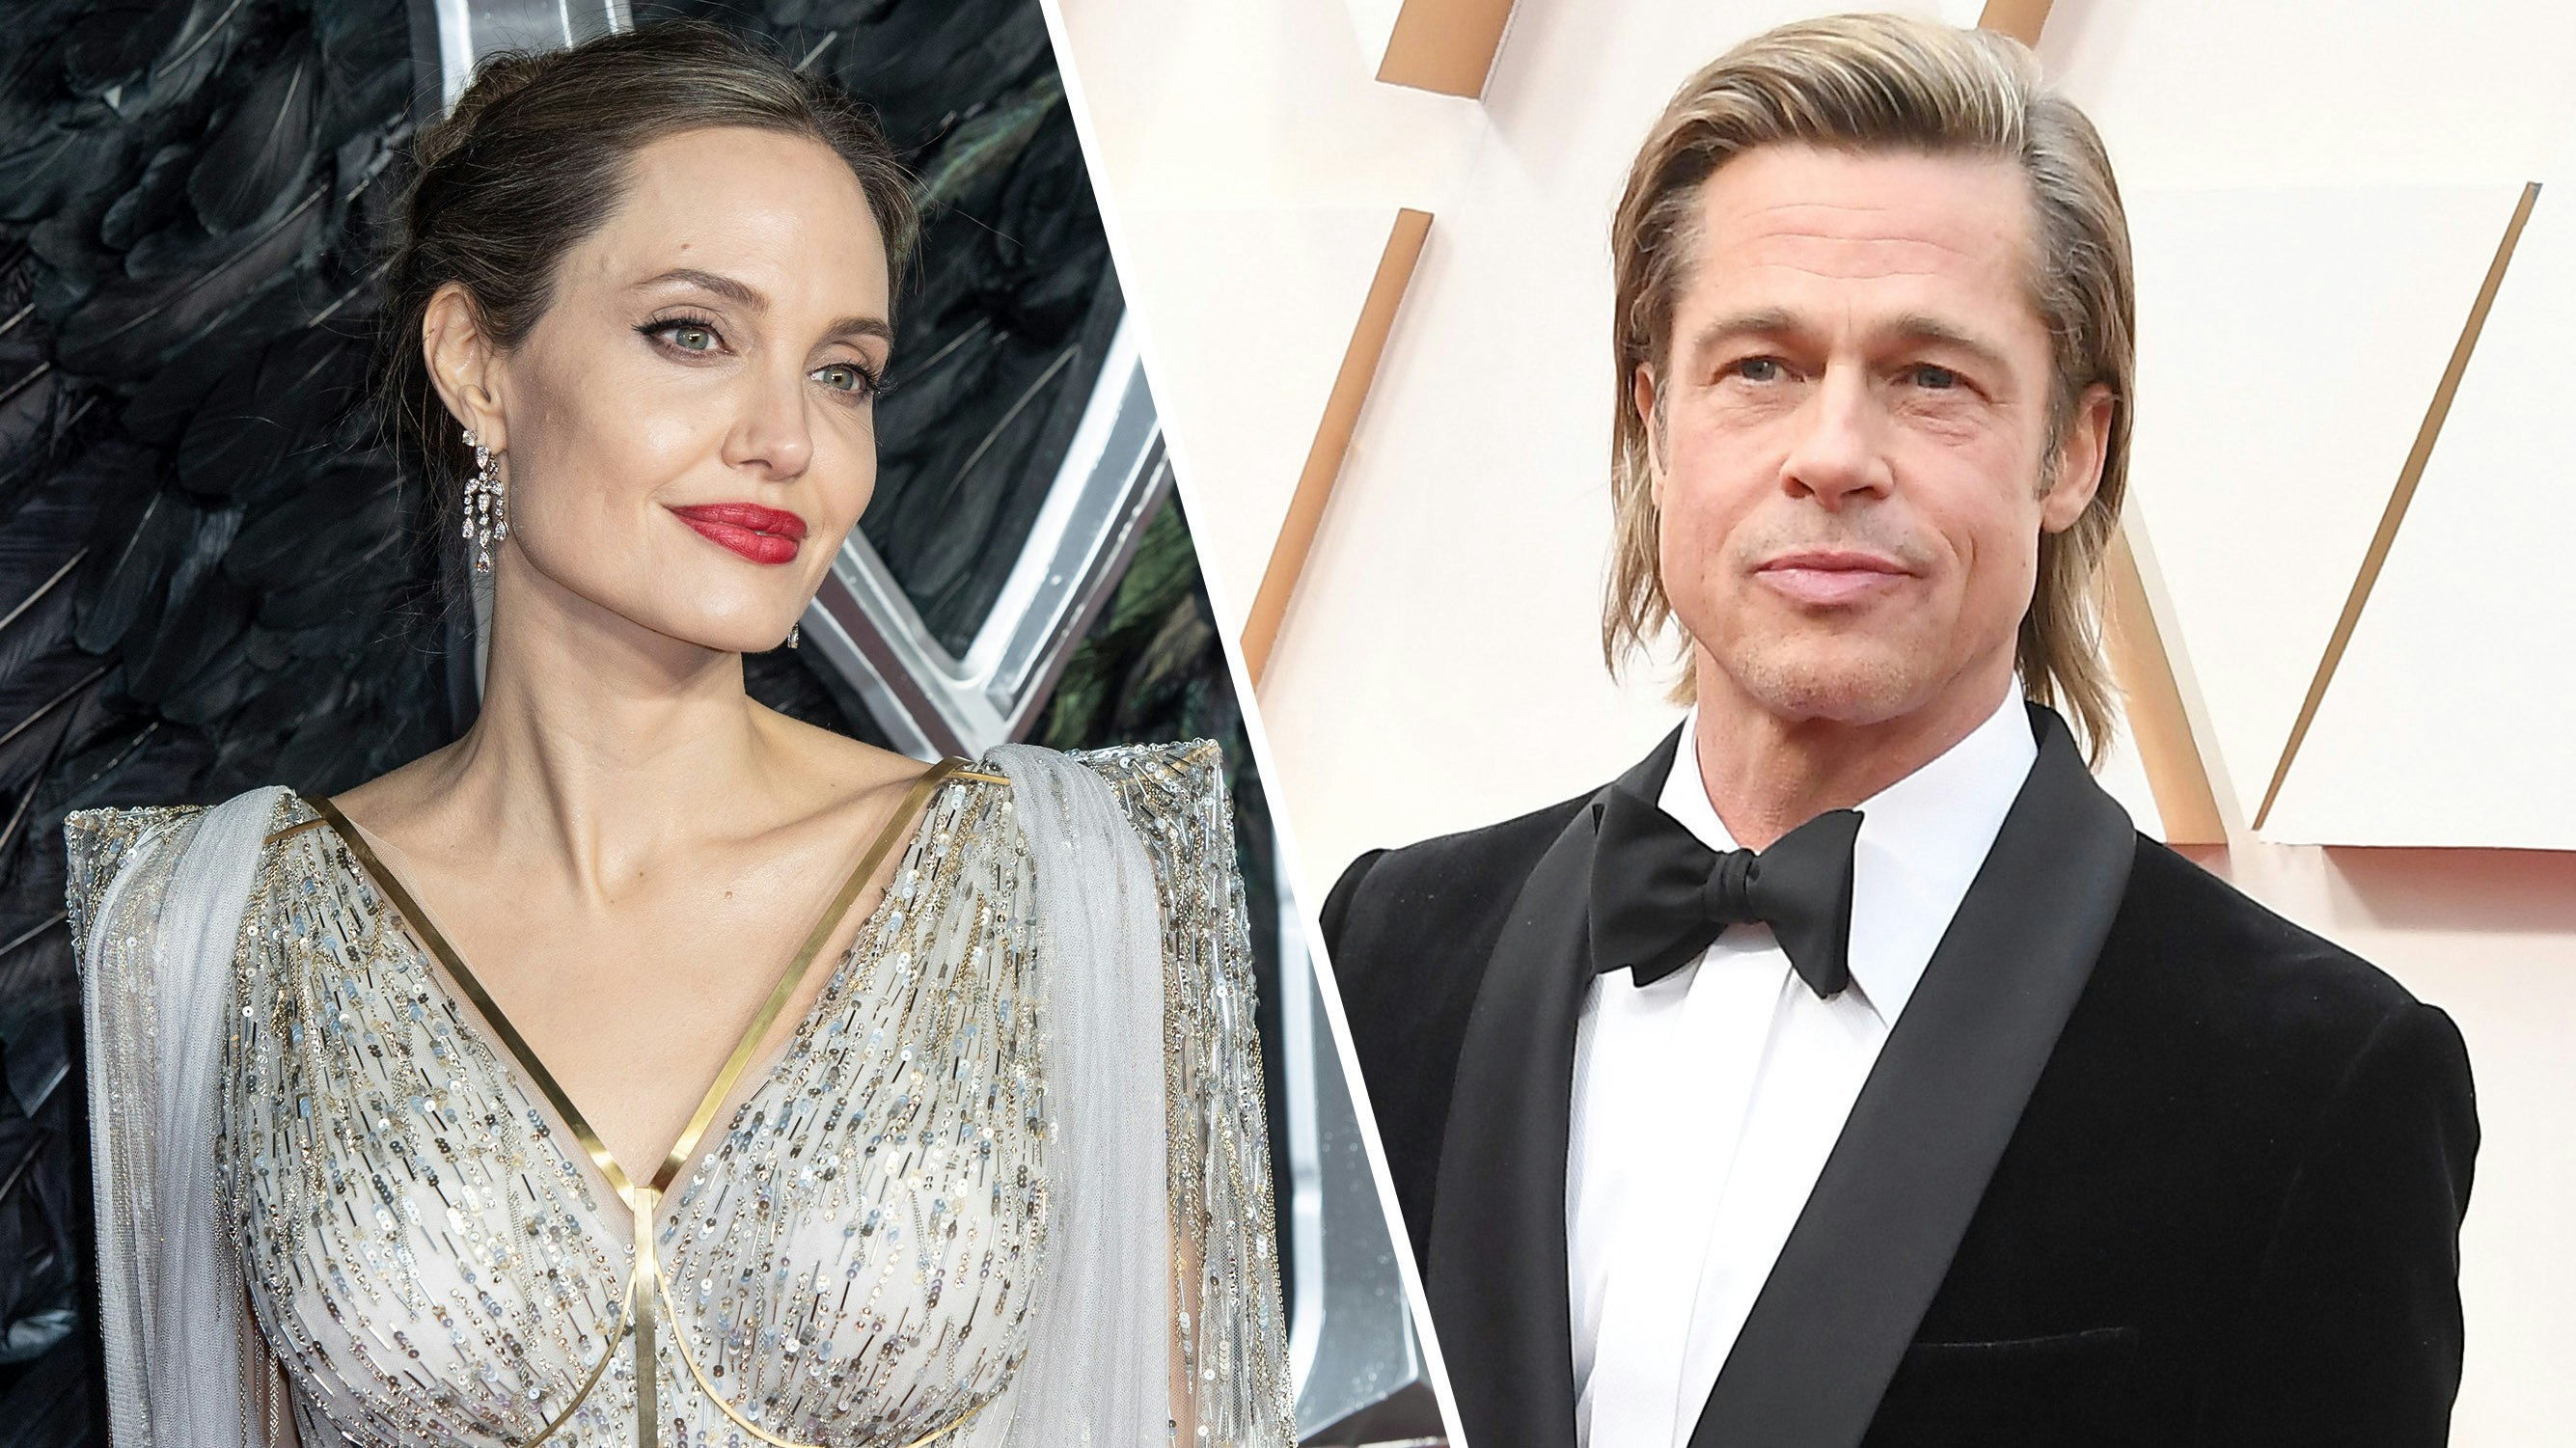 Brad Pitt seeks joint custody in divorce from Angelina Jolie - BBC News